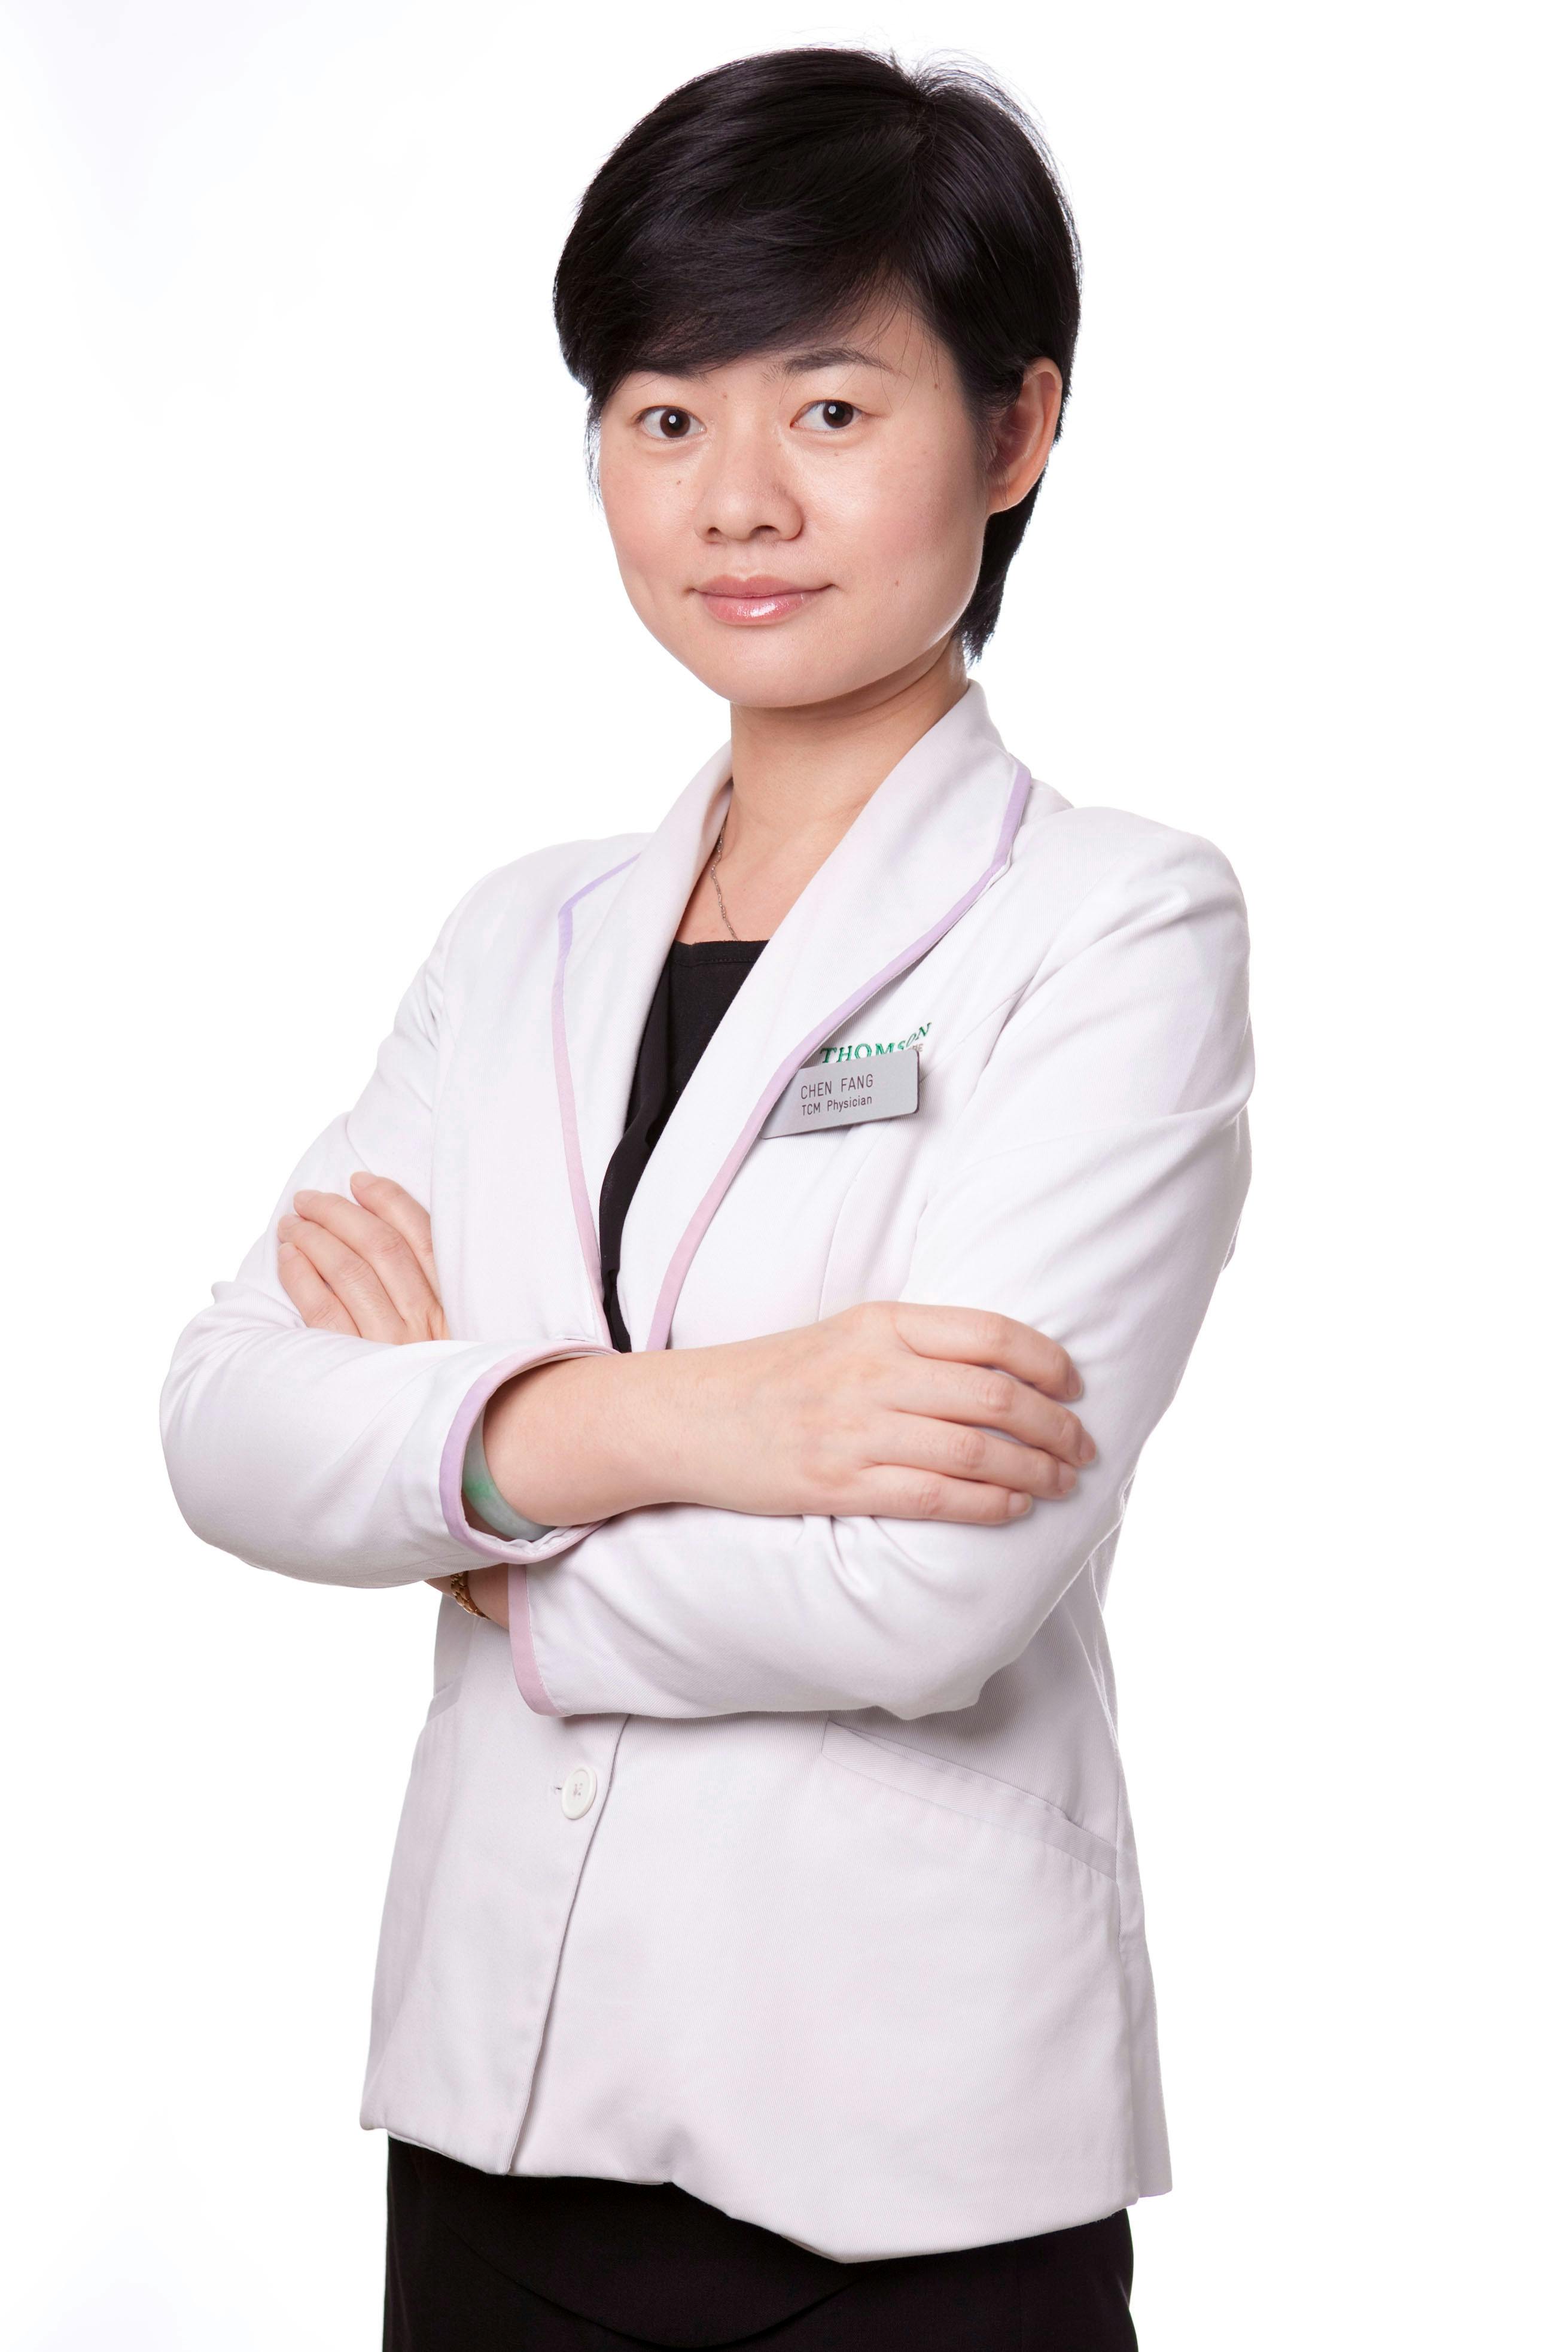 Physician Chen Fang